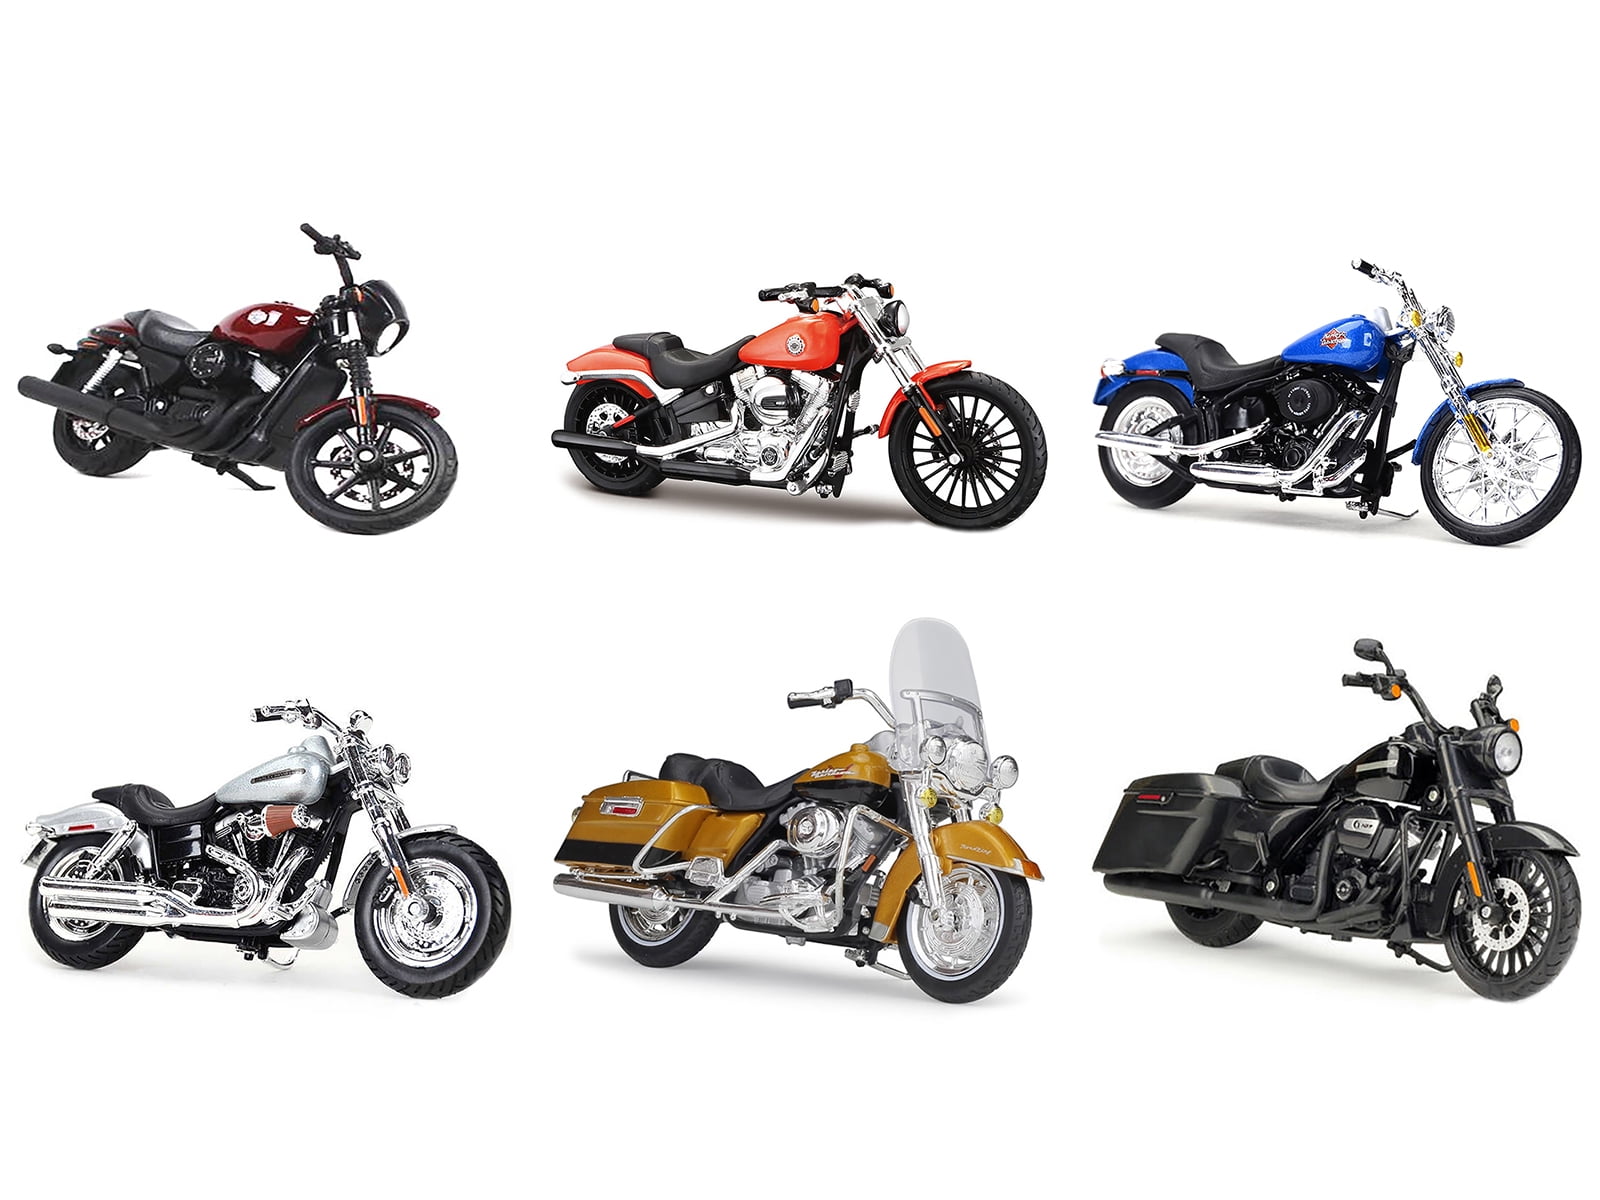 Maisto 34360/36 1:18 Harley Davidson Series 36 Assorted Motorcycle Models 